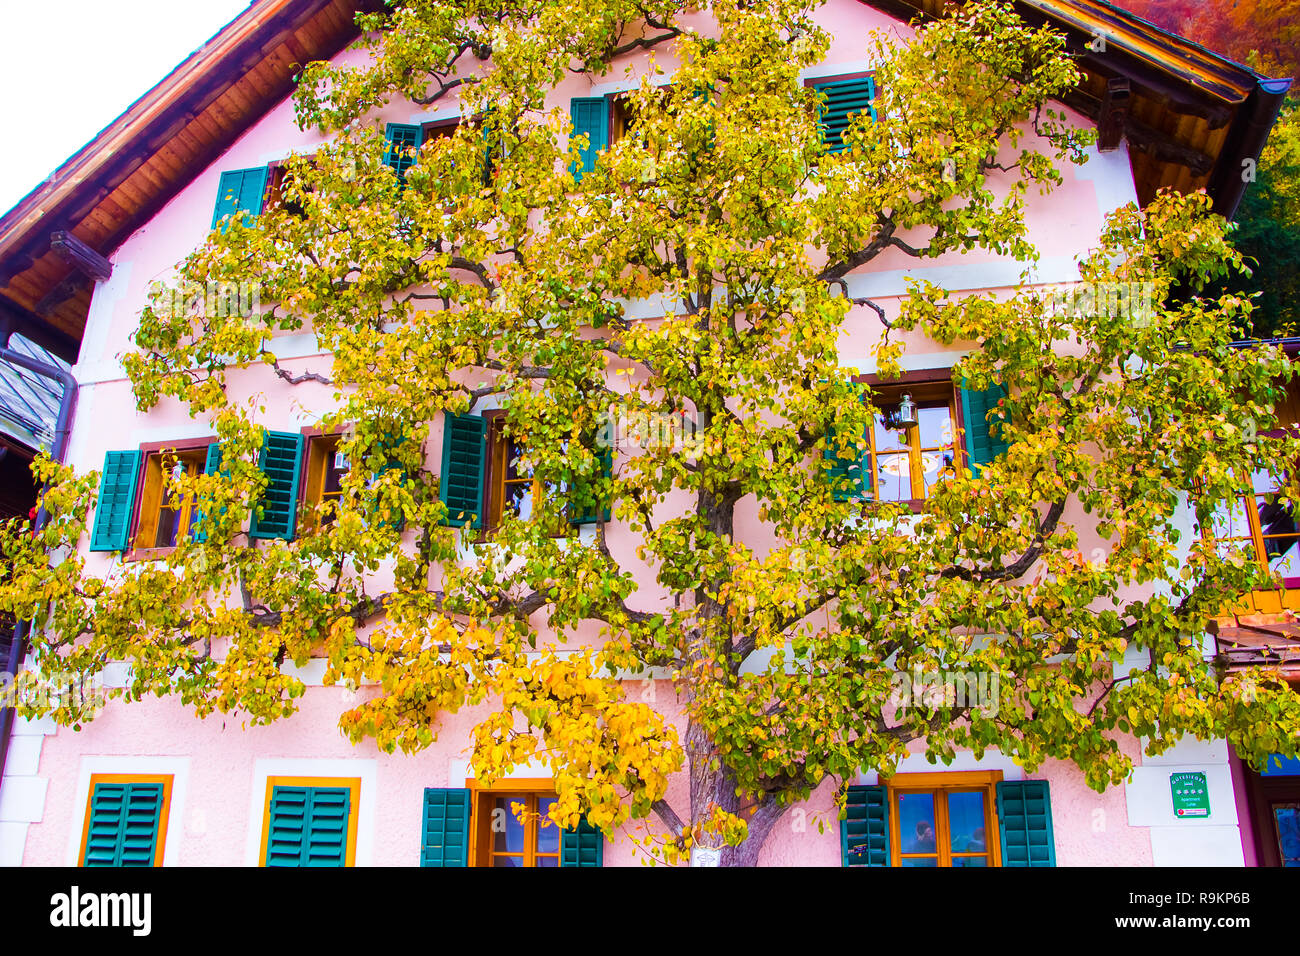 Hedera, planta rastrera de plantas leñosas en la fachada de la casa, Hallstatt en Austria Foto de stock